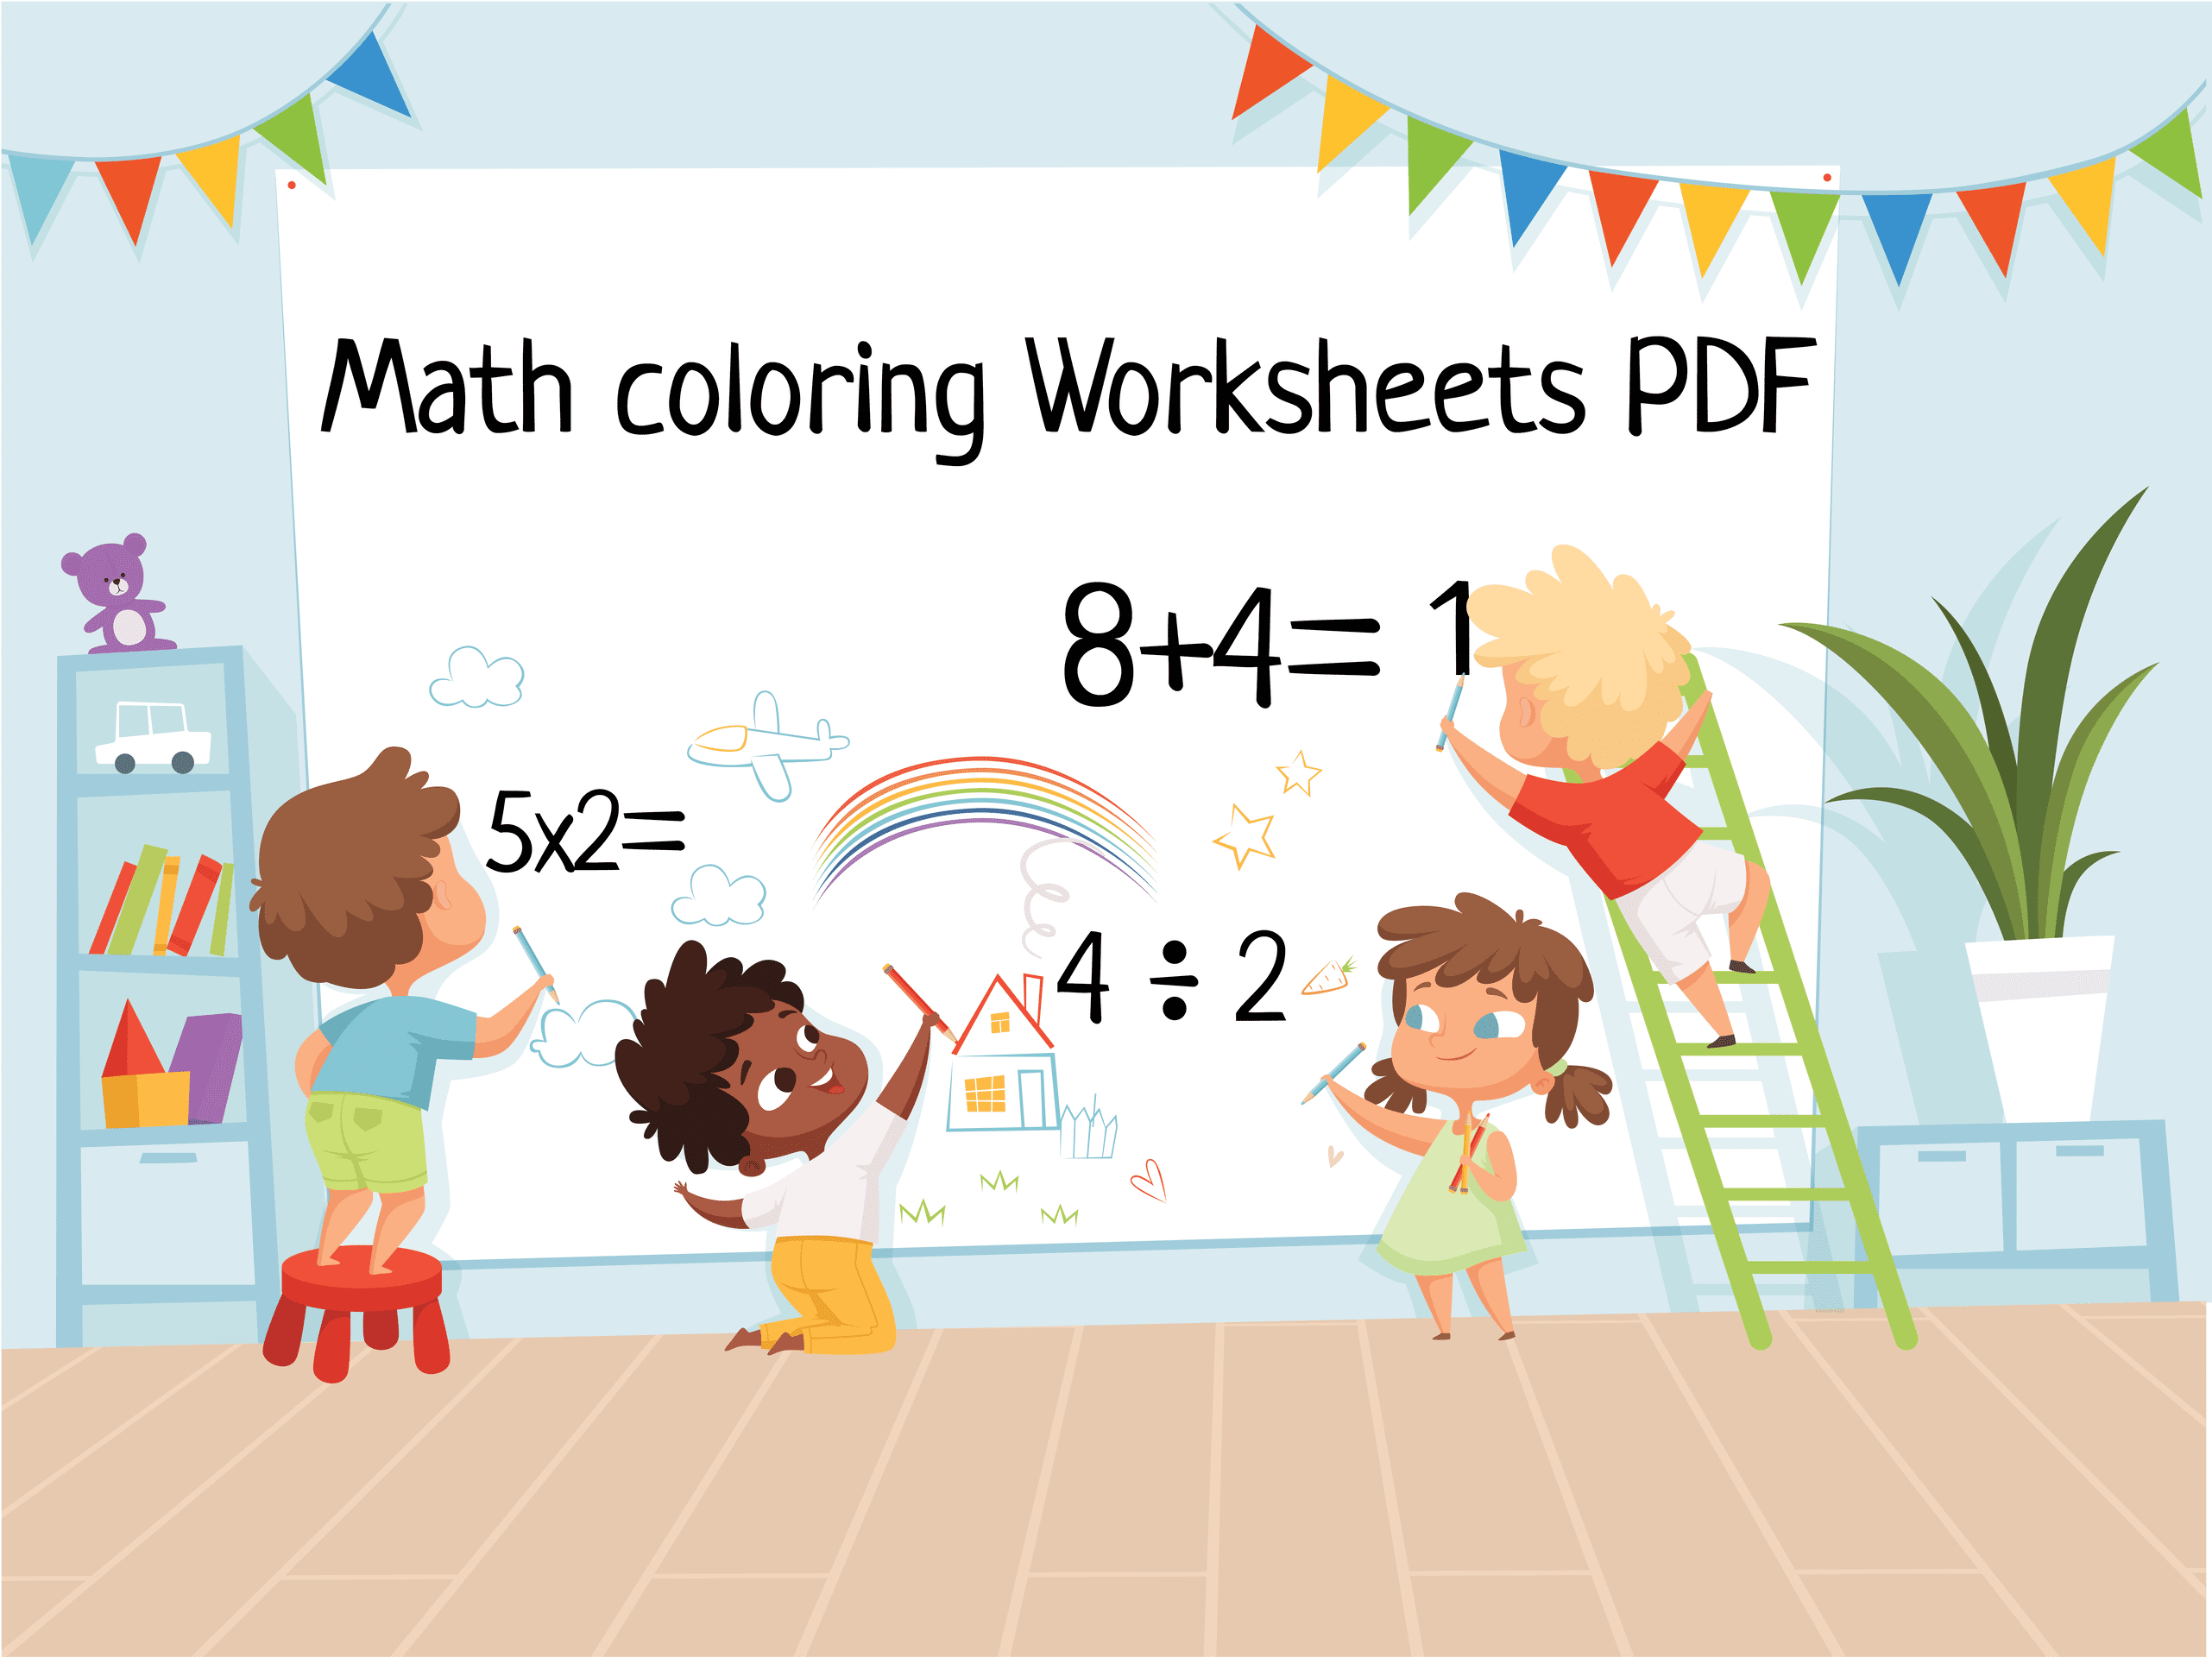 Children coloring math worksheets